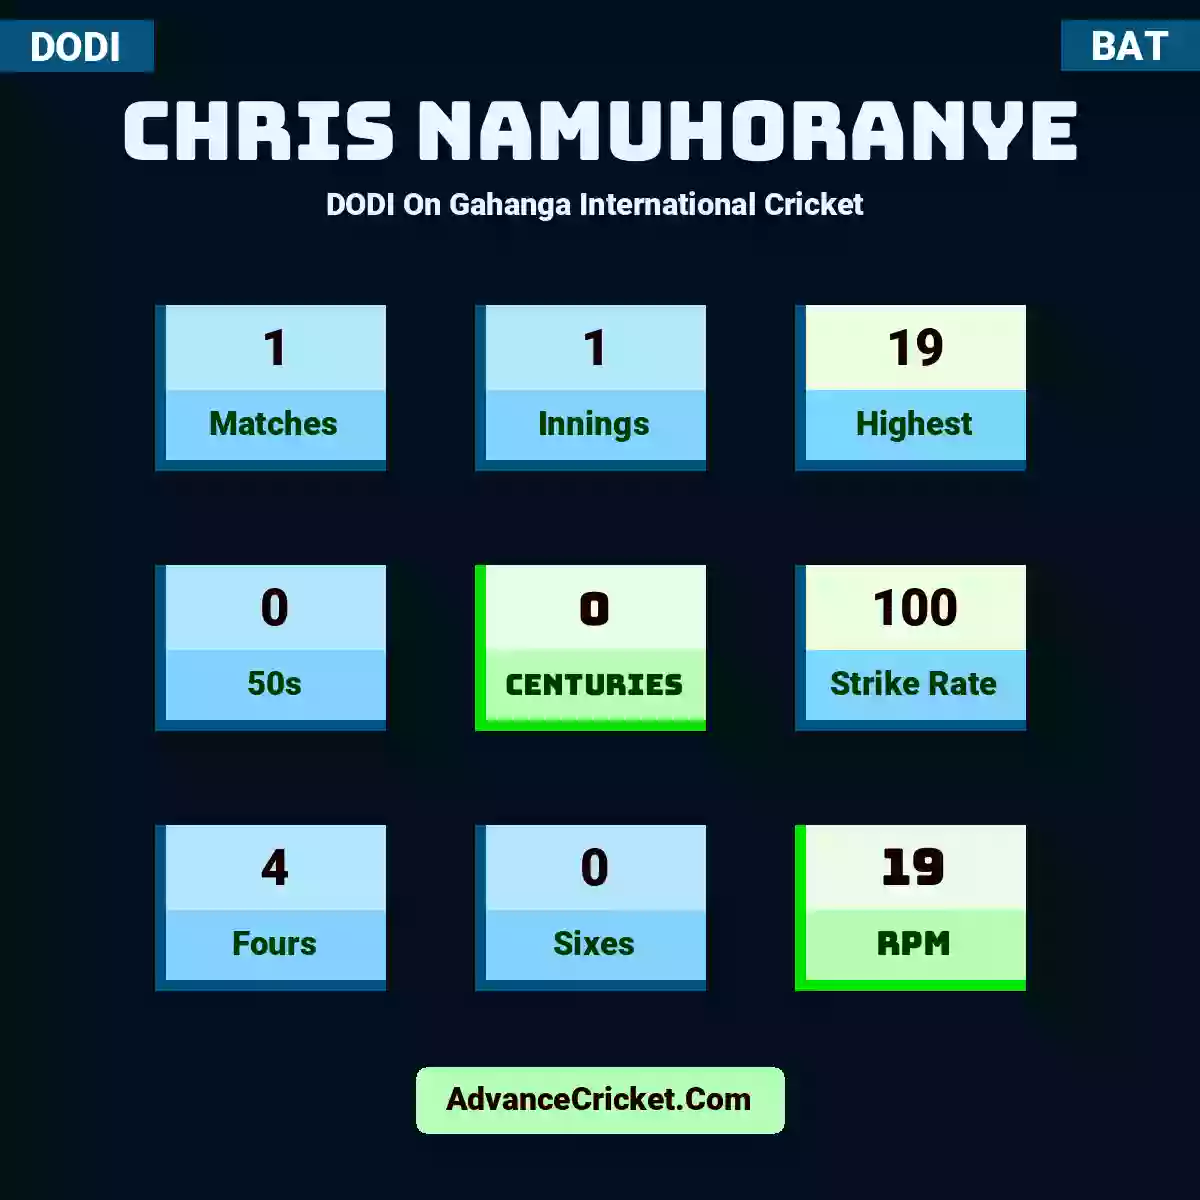 Chris Namuhoranye DODI  On Gahanga International Cricket , Chris Namuhoranye played 1 matches, scored 19 runs as highest, 0 half-centuries, and 0 centuries, with a strike rate of 100. C.Namuhoranye hit 4 fours and 0 sixes, with an RPM of 19.